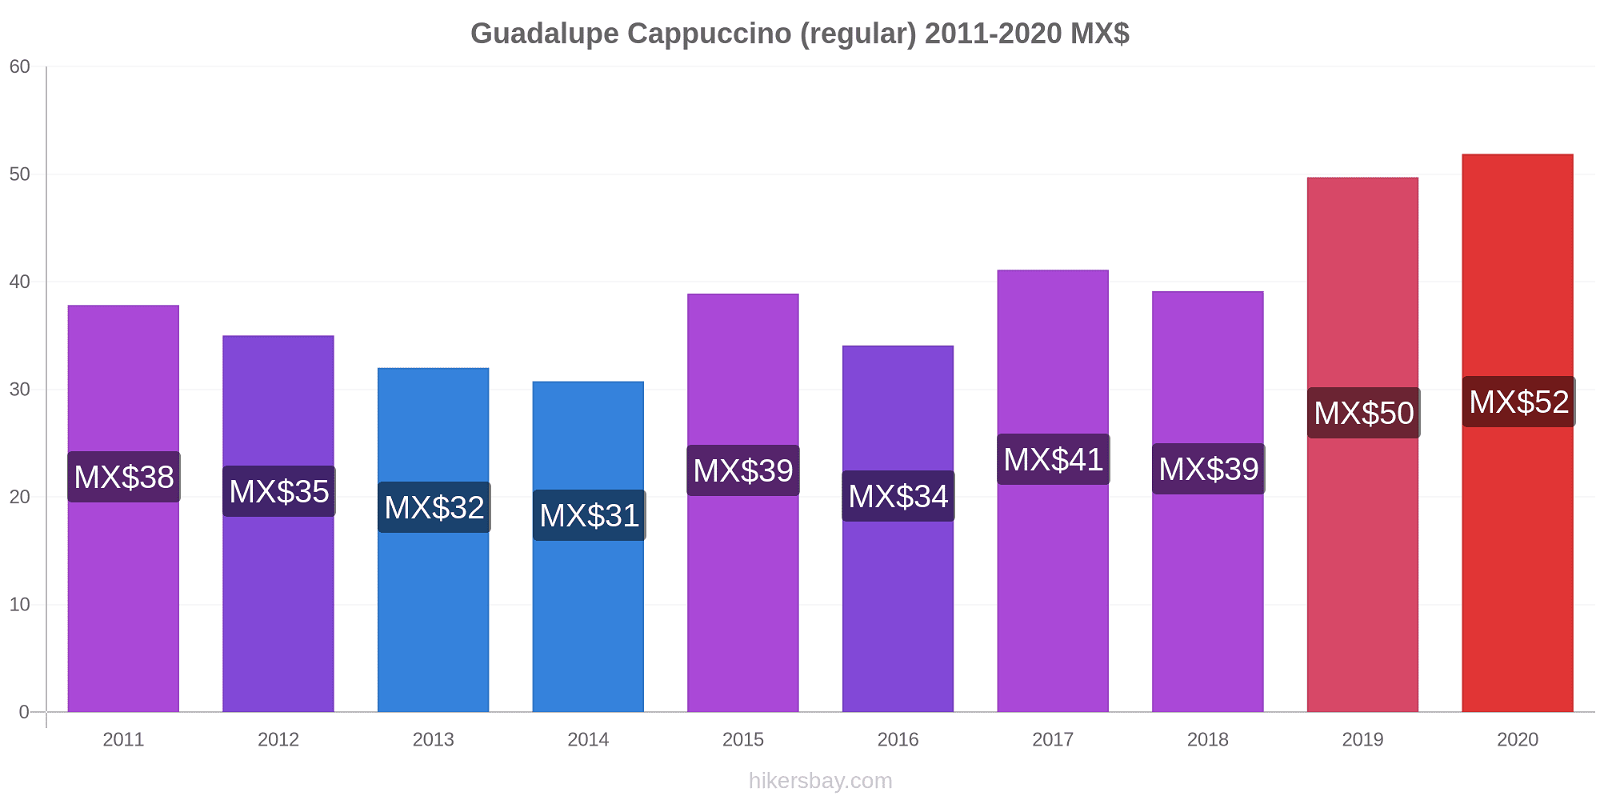 Guadalupe price changes Cappuccino (regular) hikersbay.com